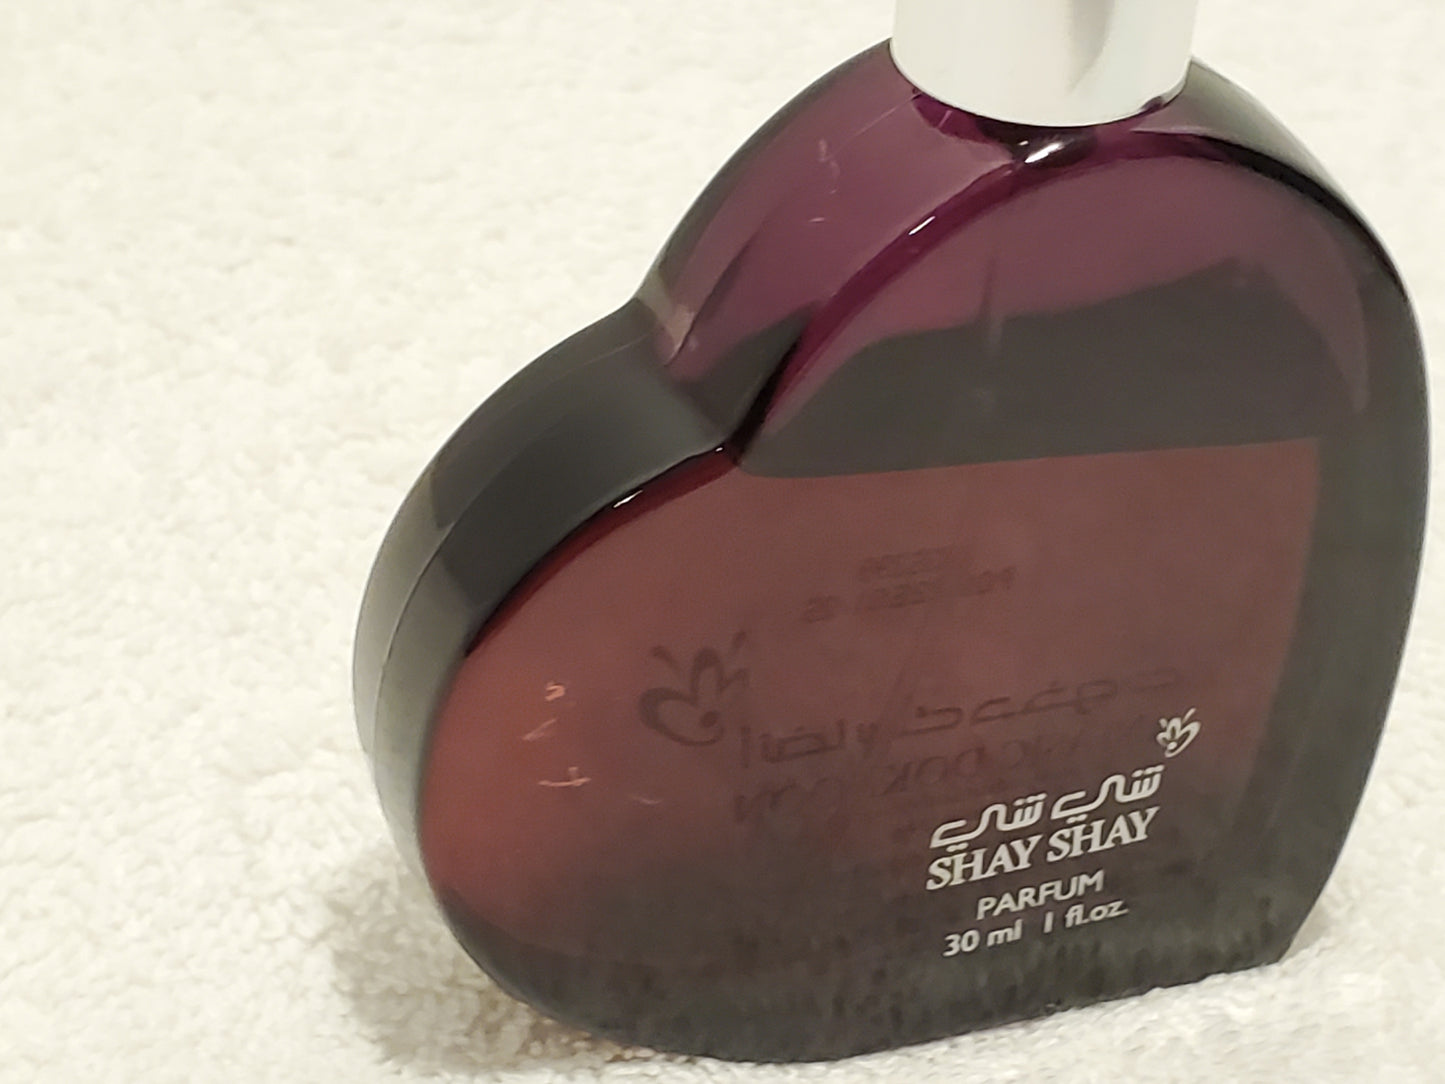 Shay Shay by Anfasic Dokhoon Women's Perfume Purple Bottle Spray 1.0 oz Fragrance